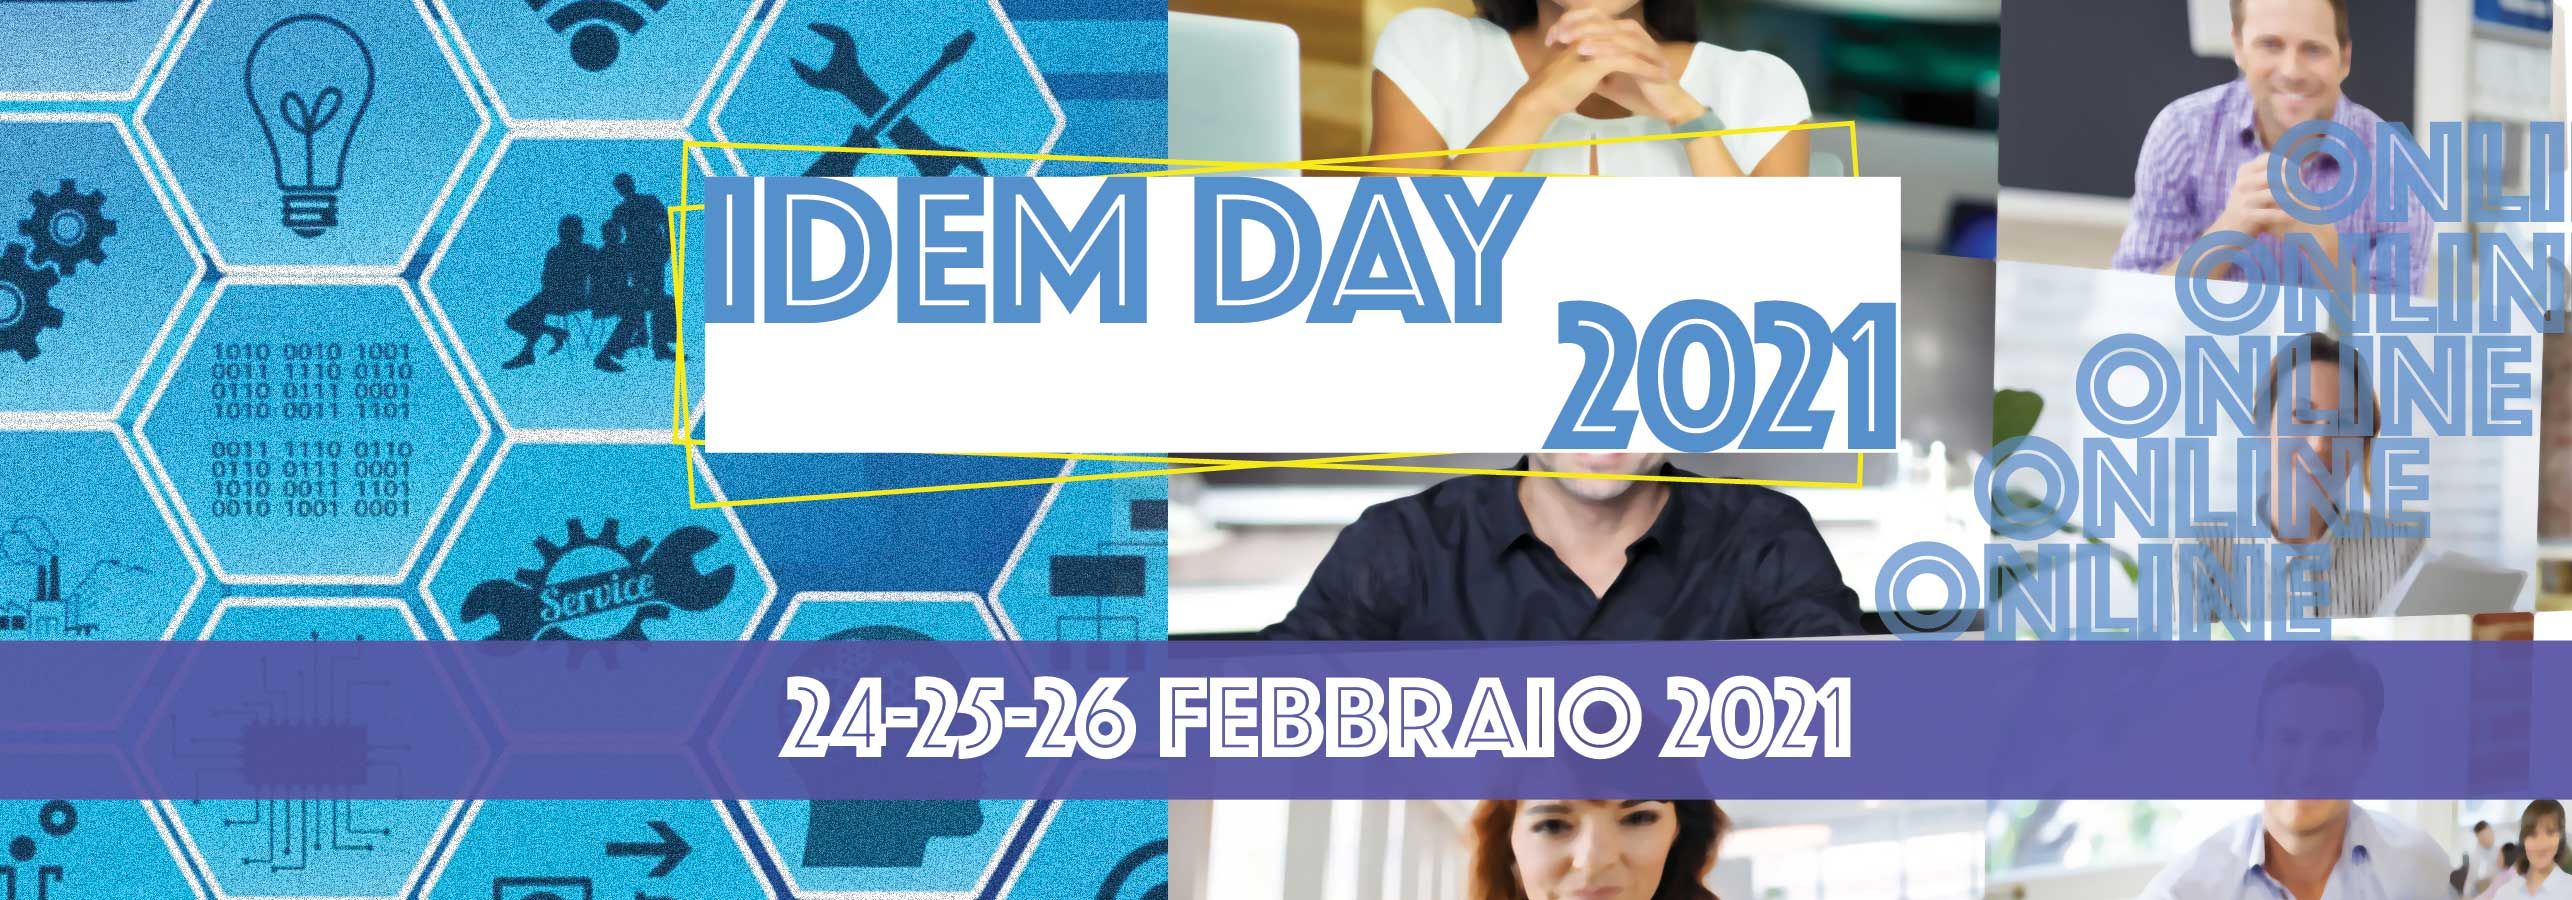 IDEM Day 2021